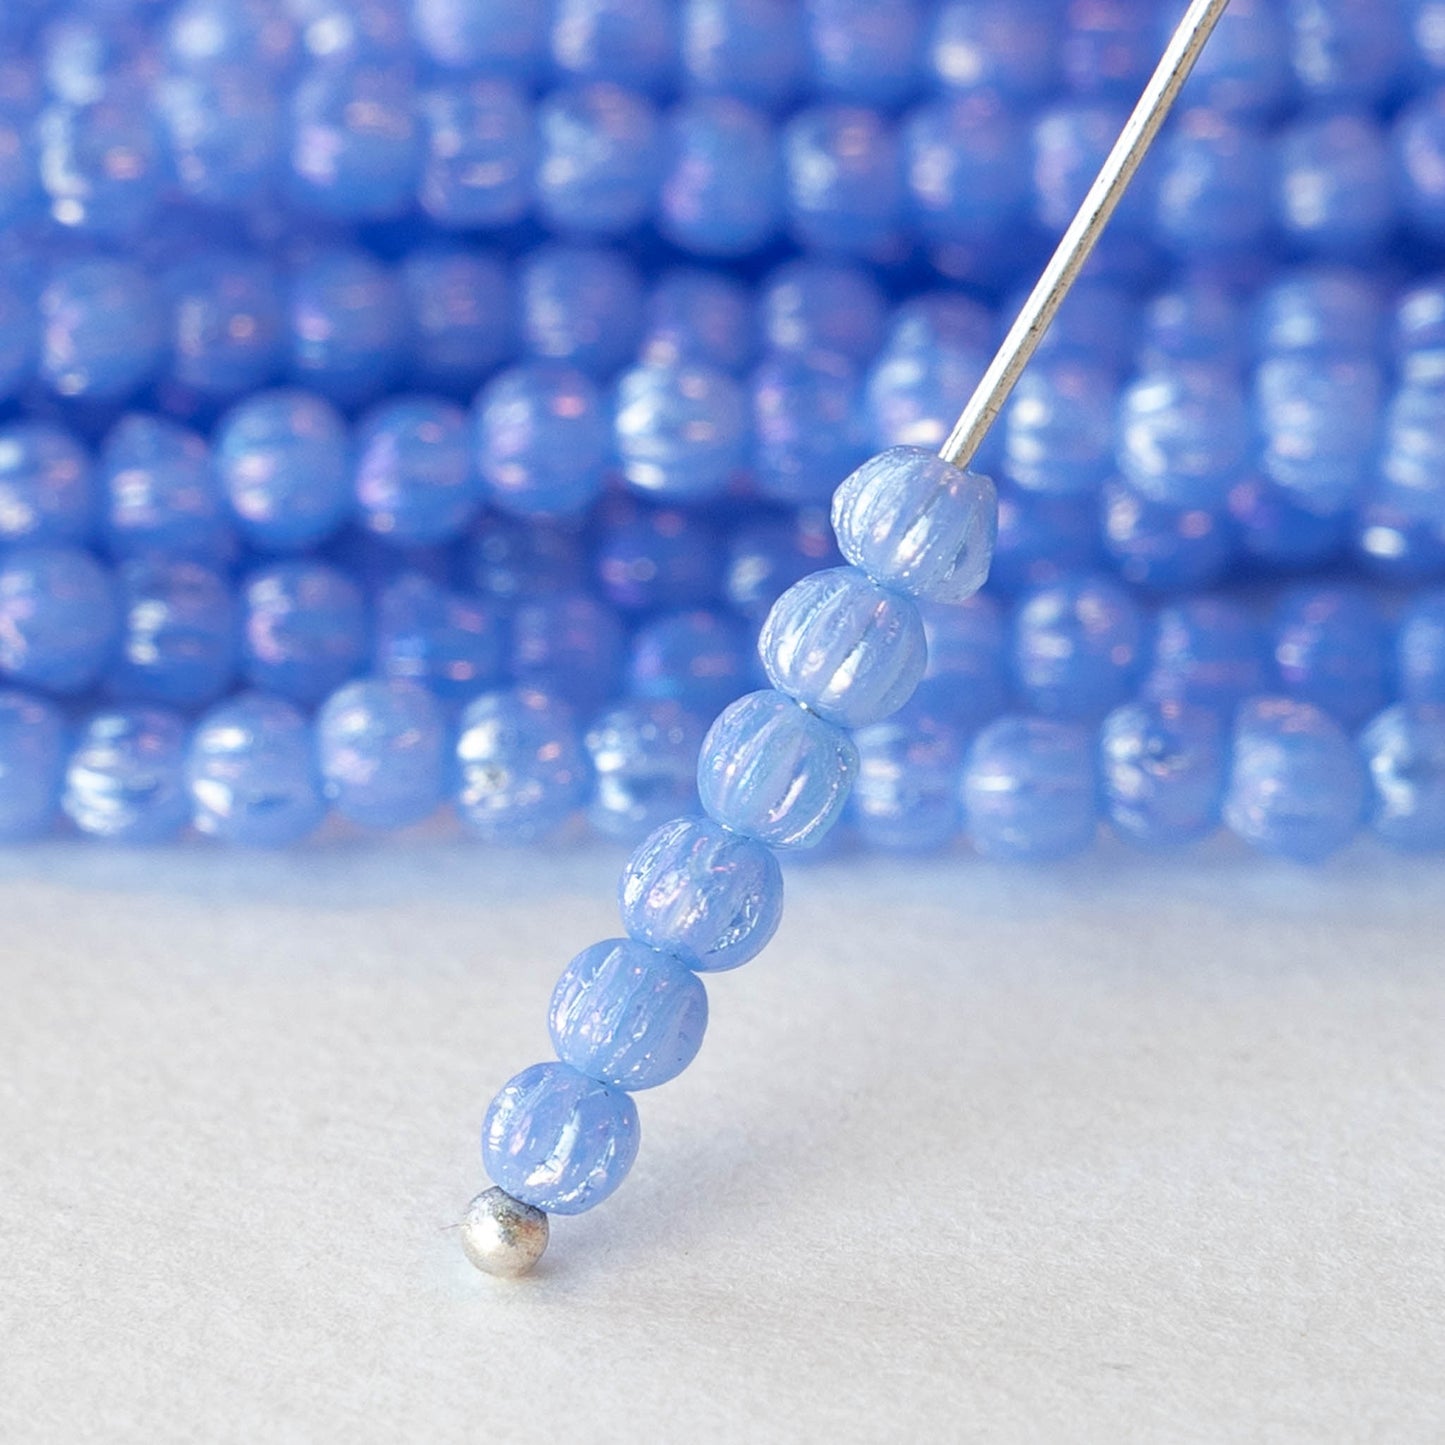 3mm Melon Beads - Milky Light Sapphire Luster AB - 100 Beads